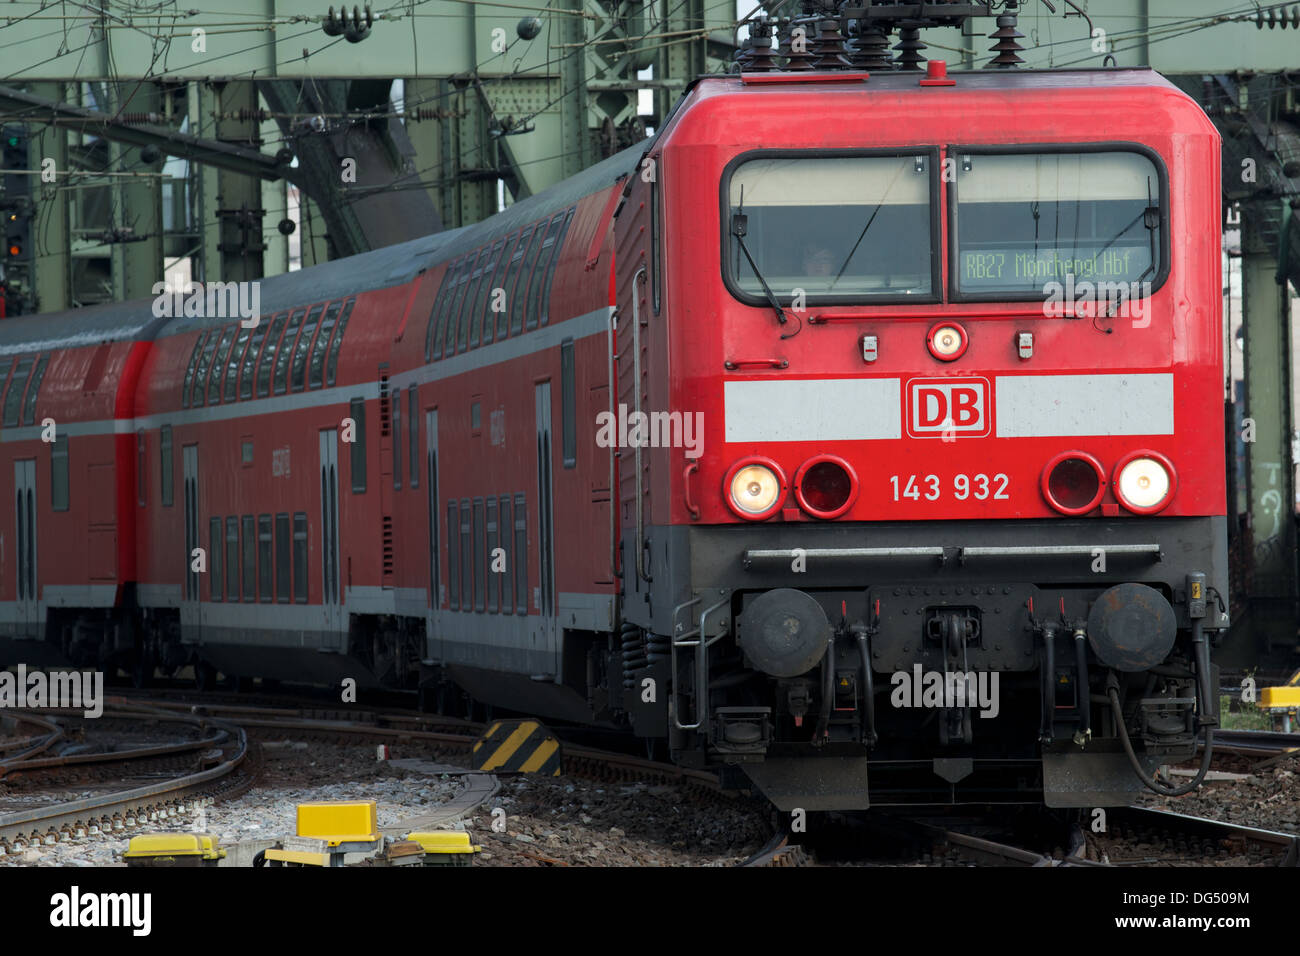 RB27 (treno regionale) Colonia Germania Foto Stock